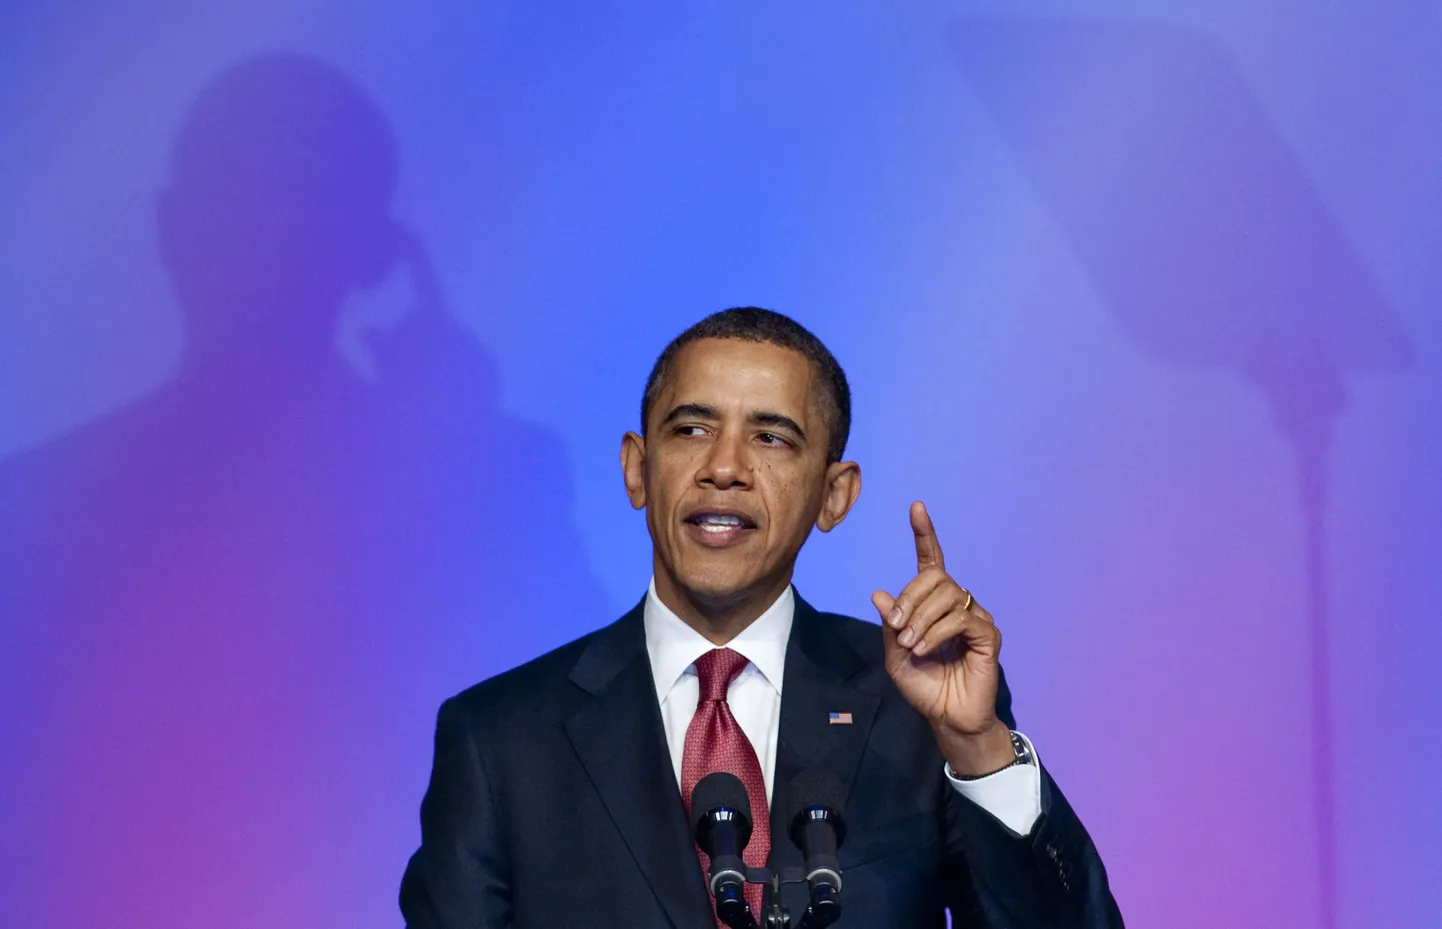 USA president Barack Obama